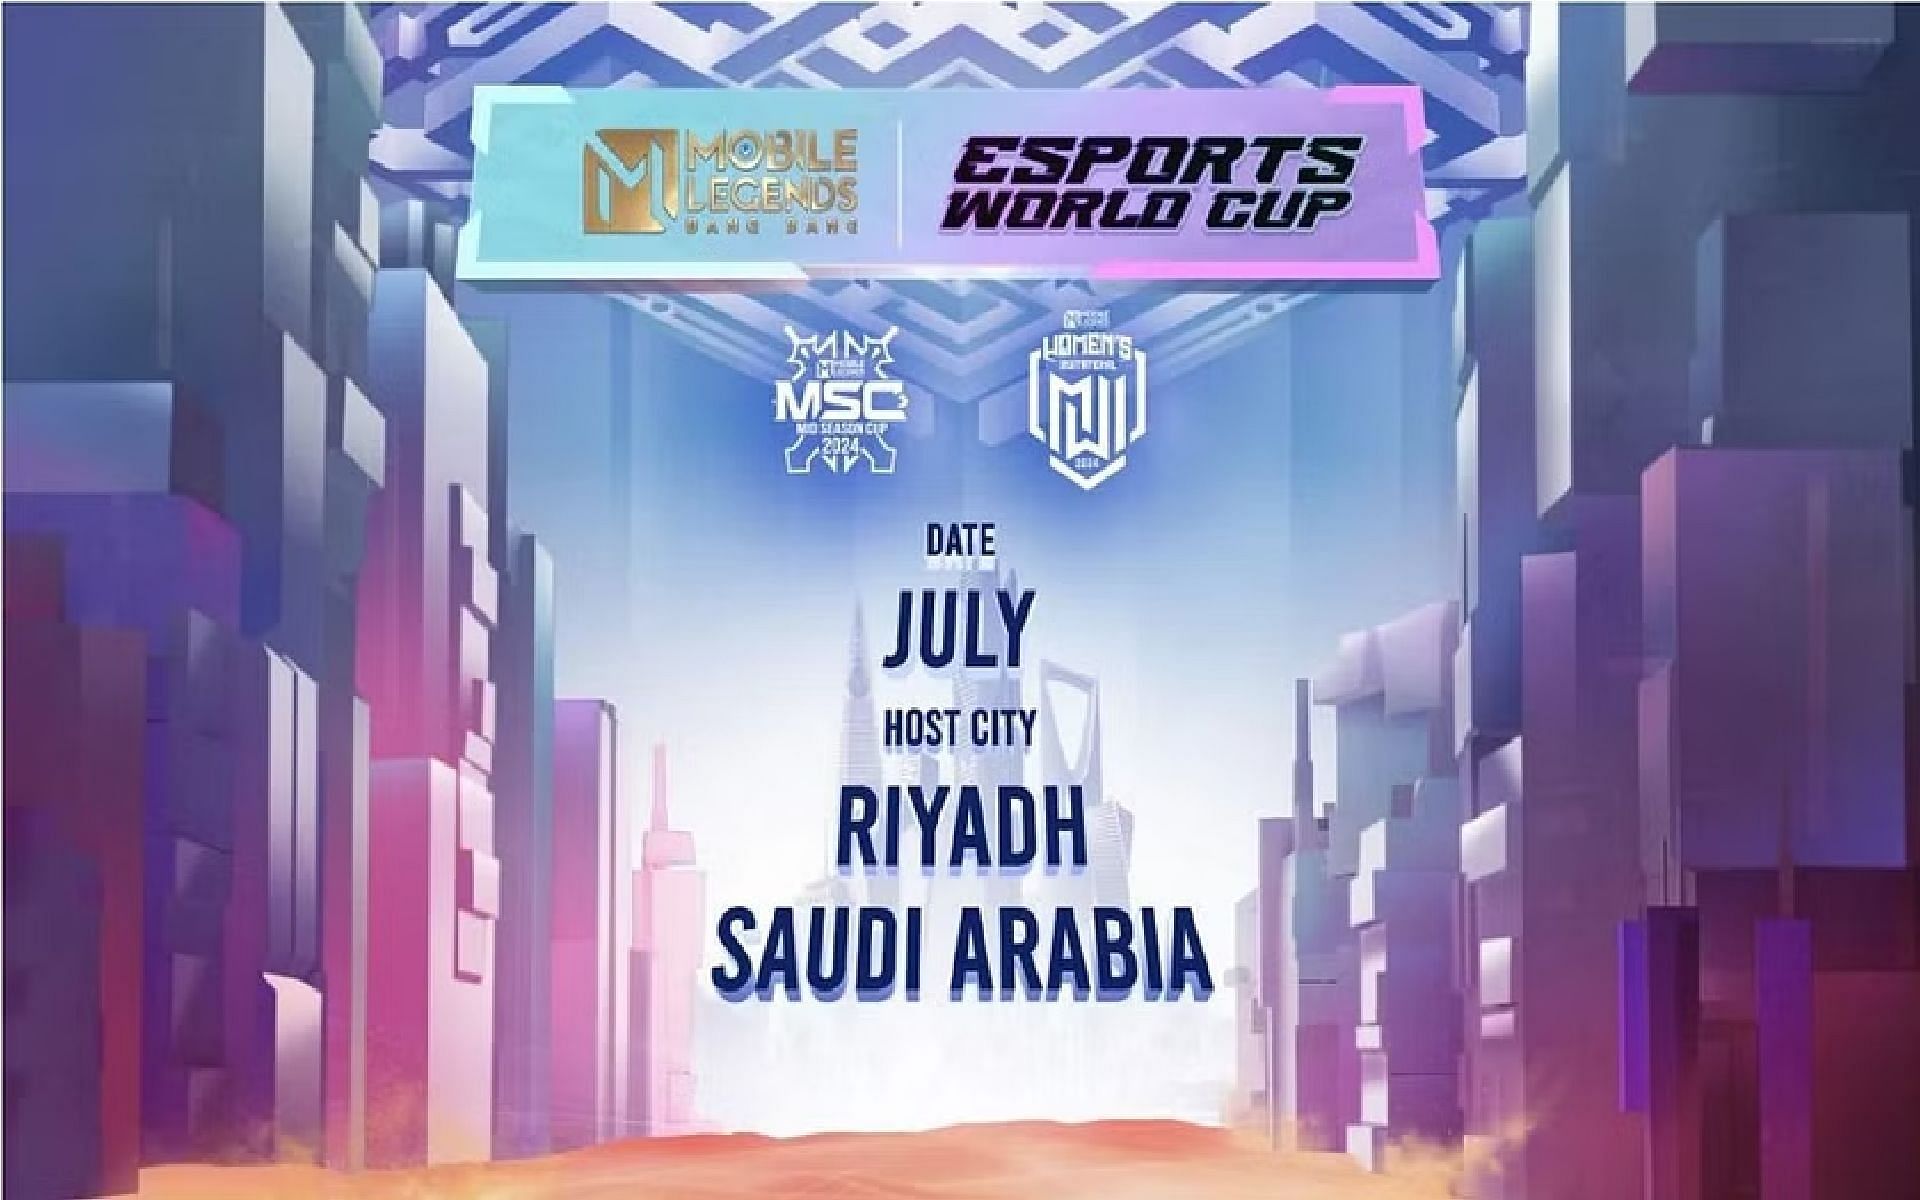 Esports World Cup will take place in Riyadh, Saudi Arabia (Image courtesy of Moonton Games)